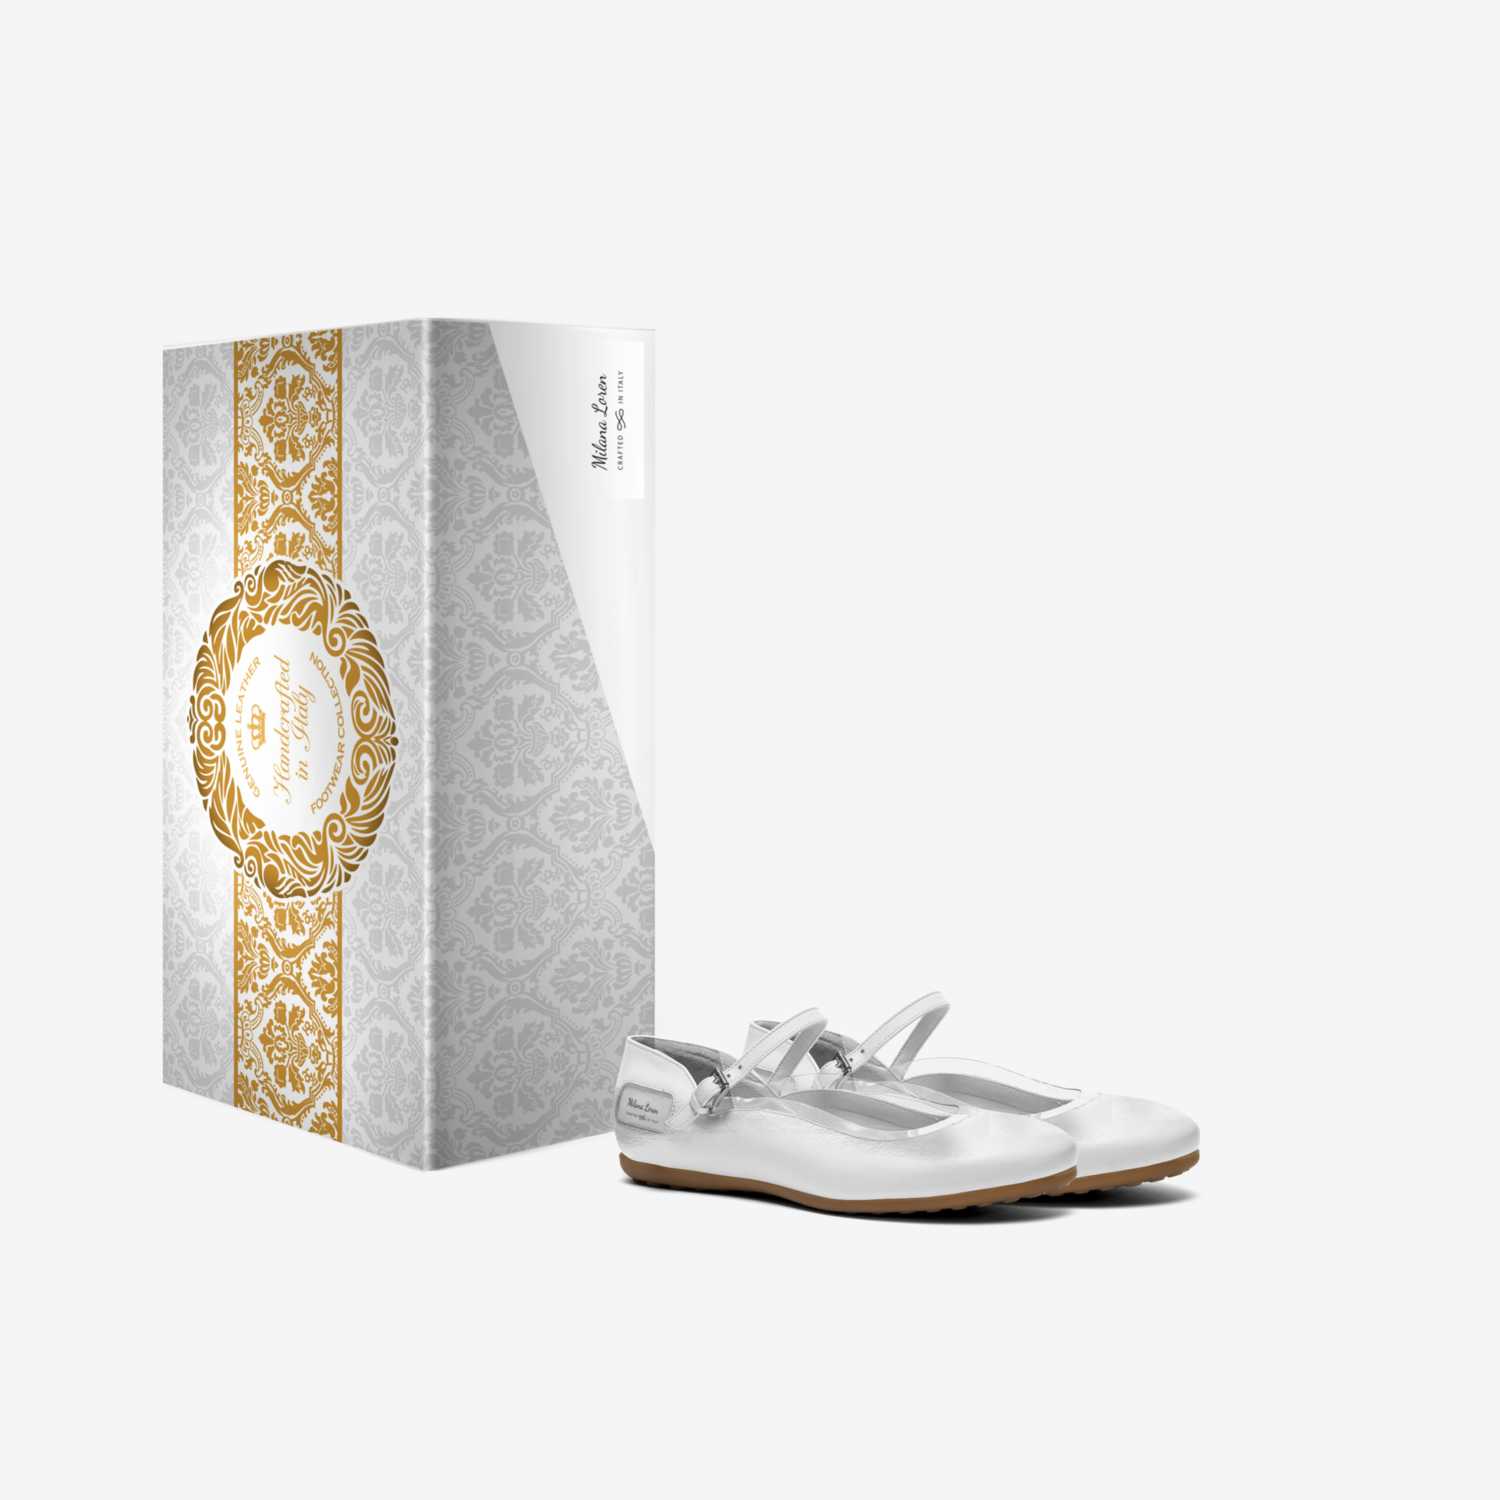 Milana Loren  custom made in Italy shoes by Layla Loren | Box view